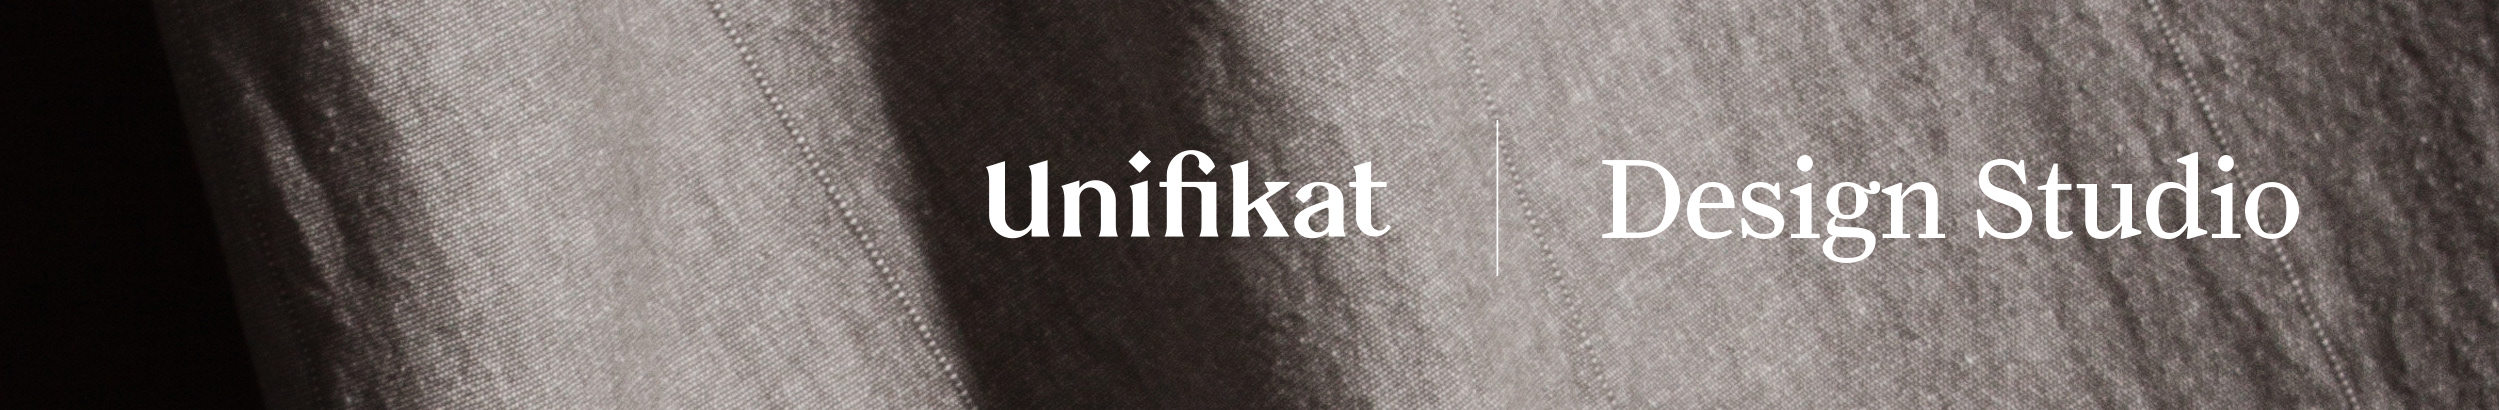 Unifikat Design Studio's profile banner